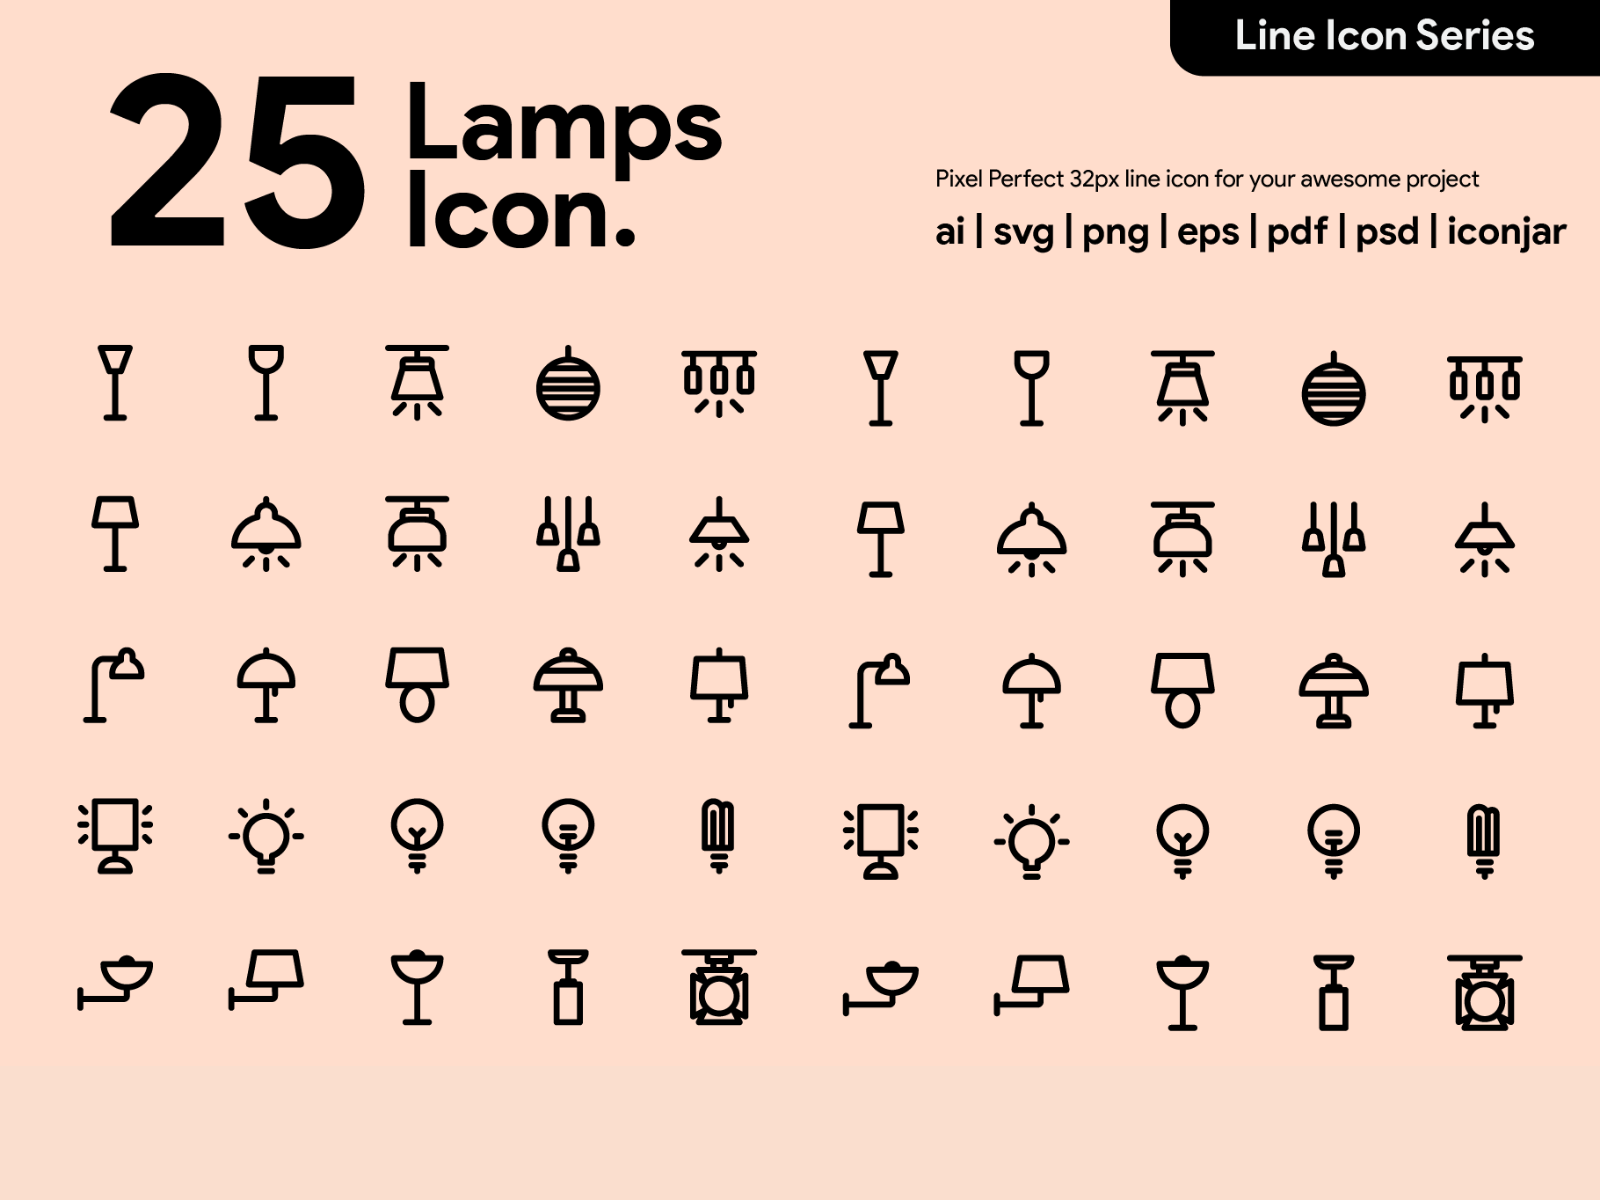 App icons design idea #298: Kawaicon - 25 Lamps Line Icon